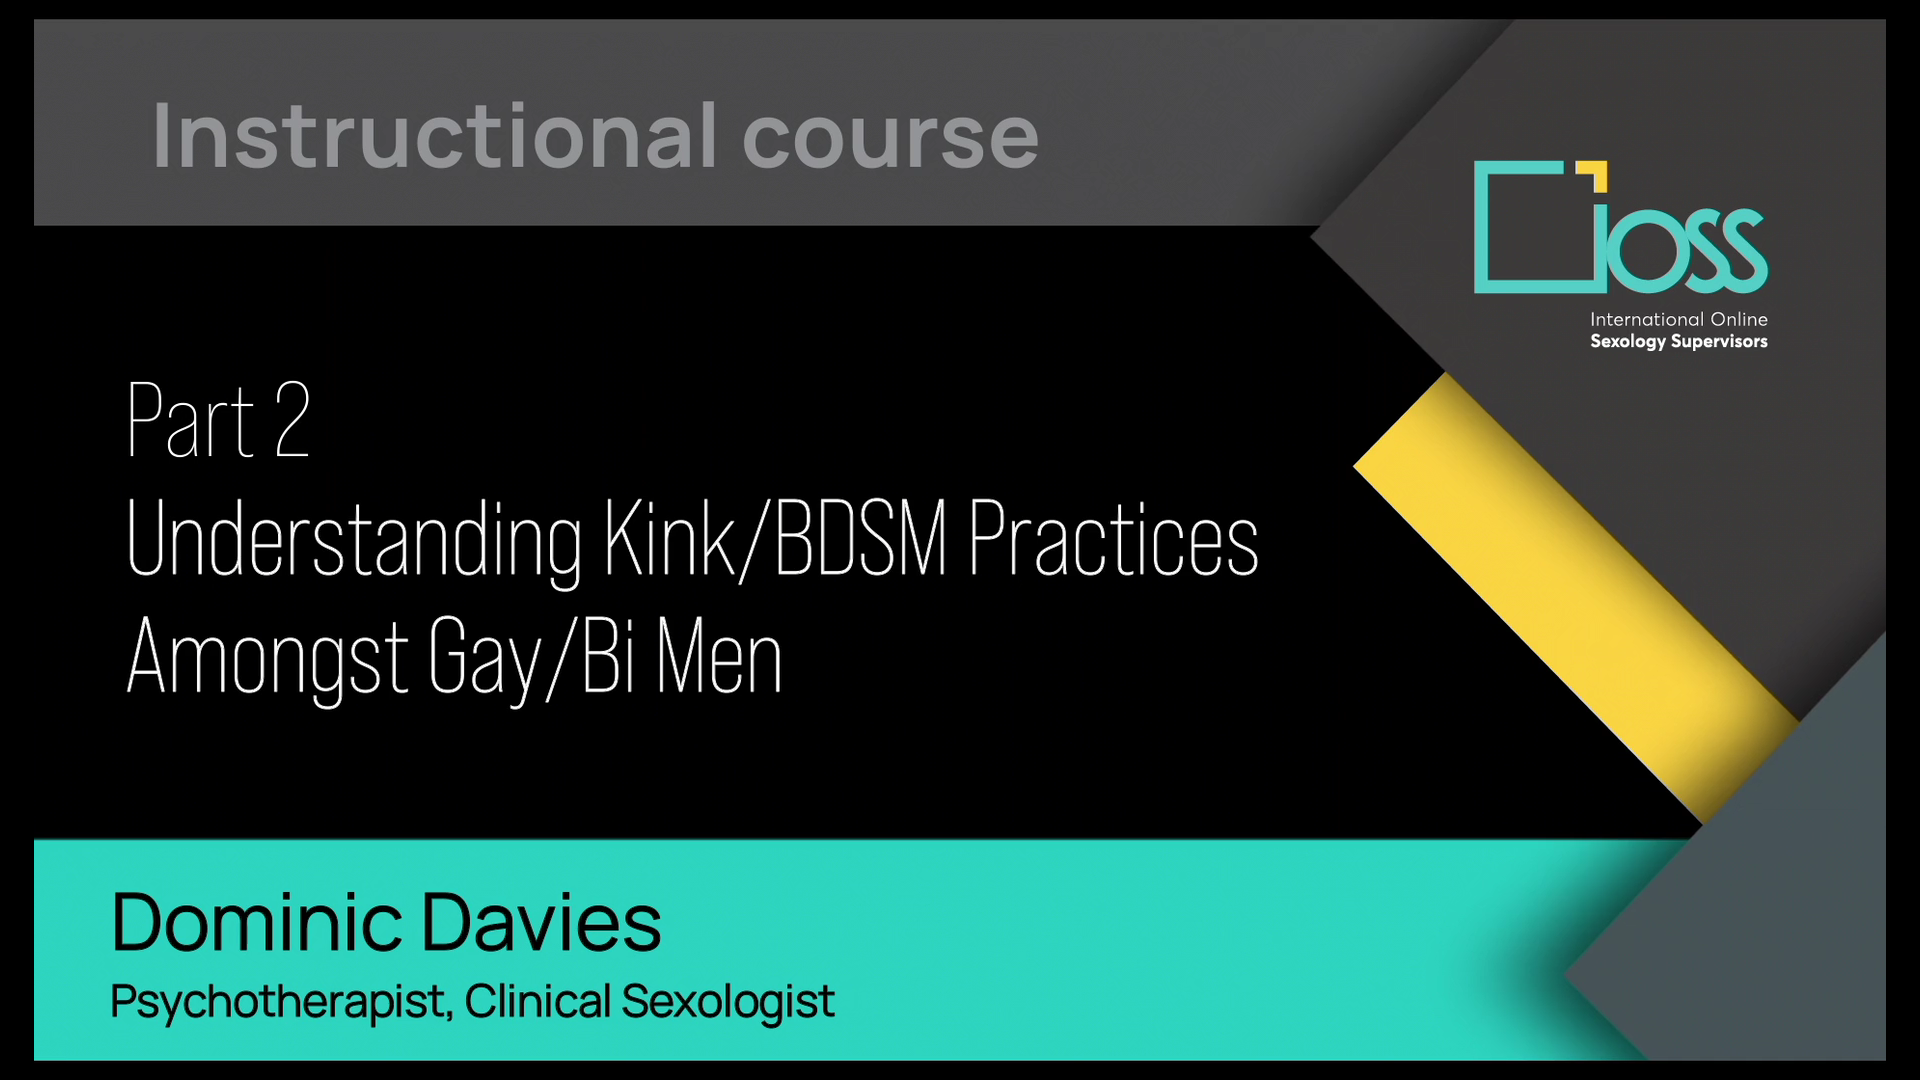 Part 2 Understanding Kink/BDSM Practices Amongst Gay/Bi Men (Part 1 & 2)